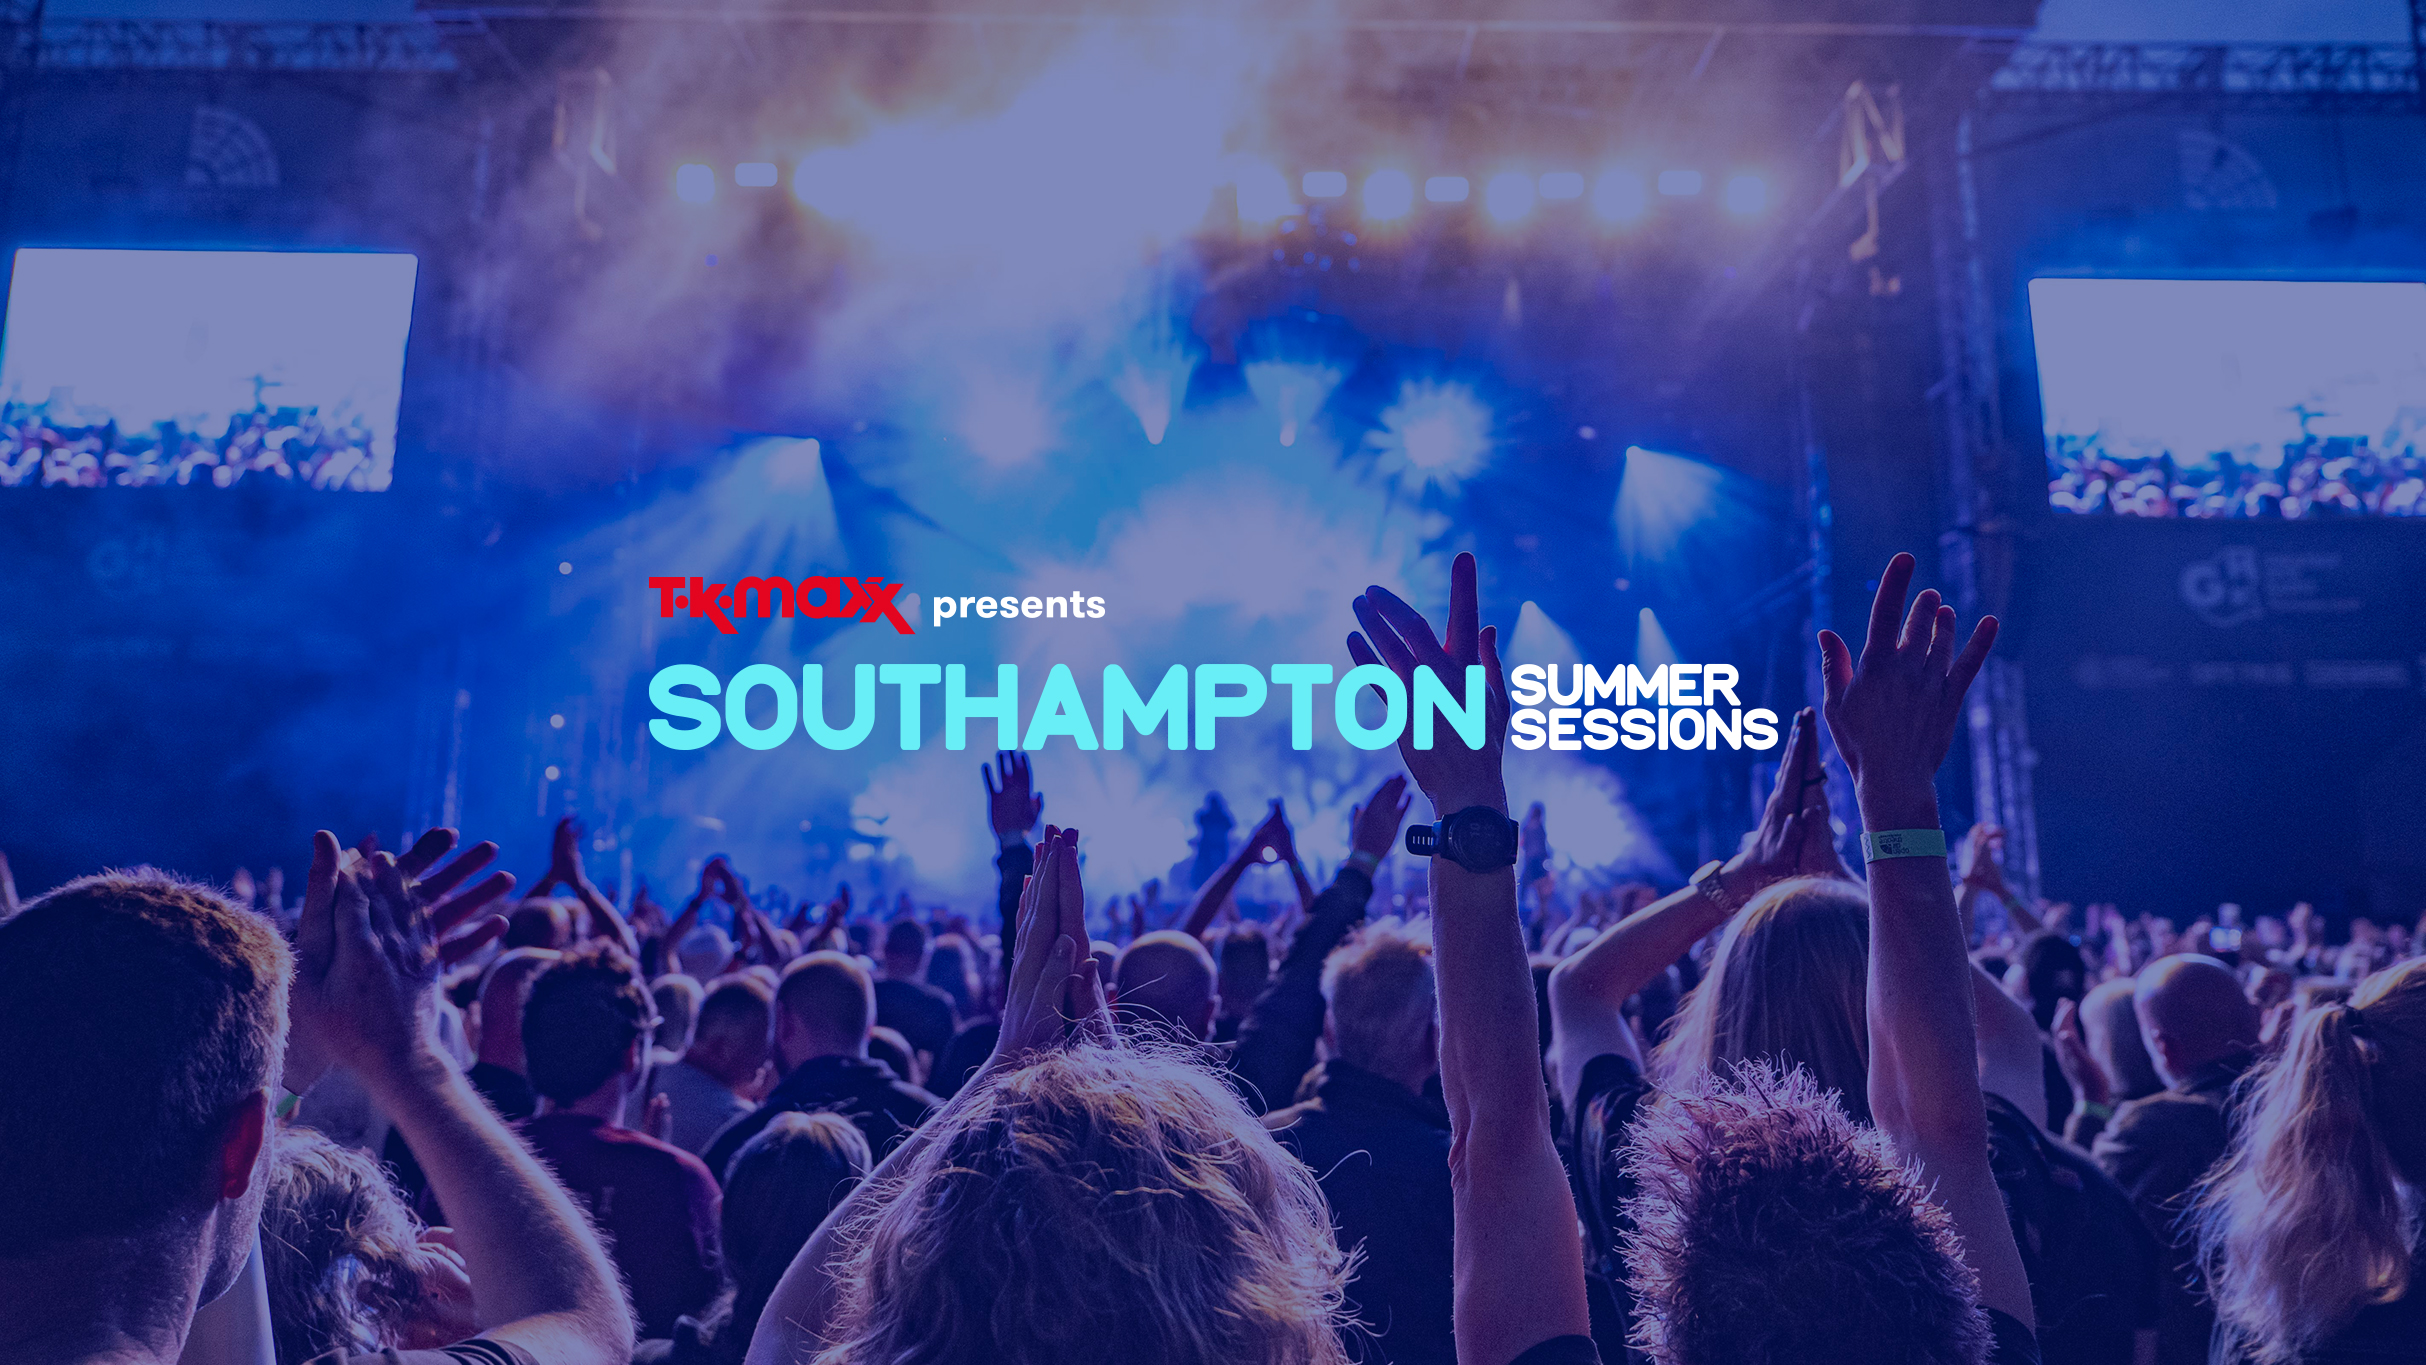 TK Maxx Presents Southampton Summer Sessions